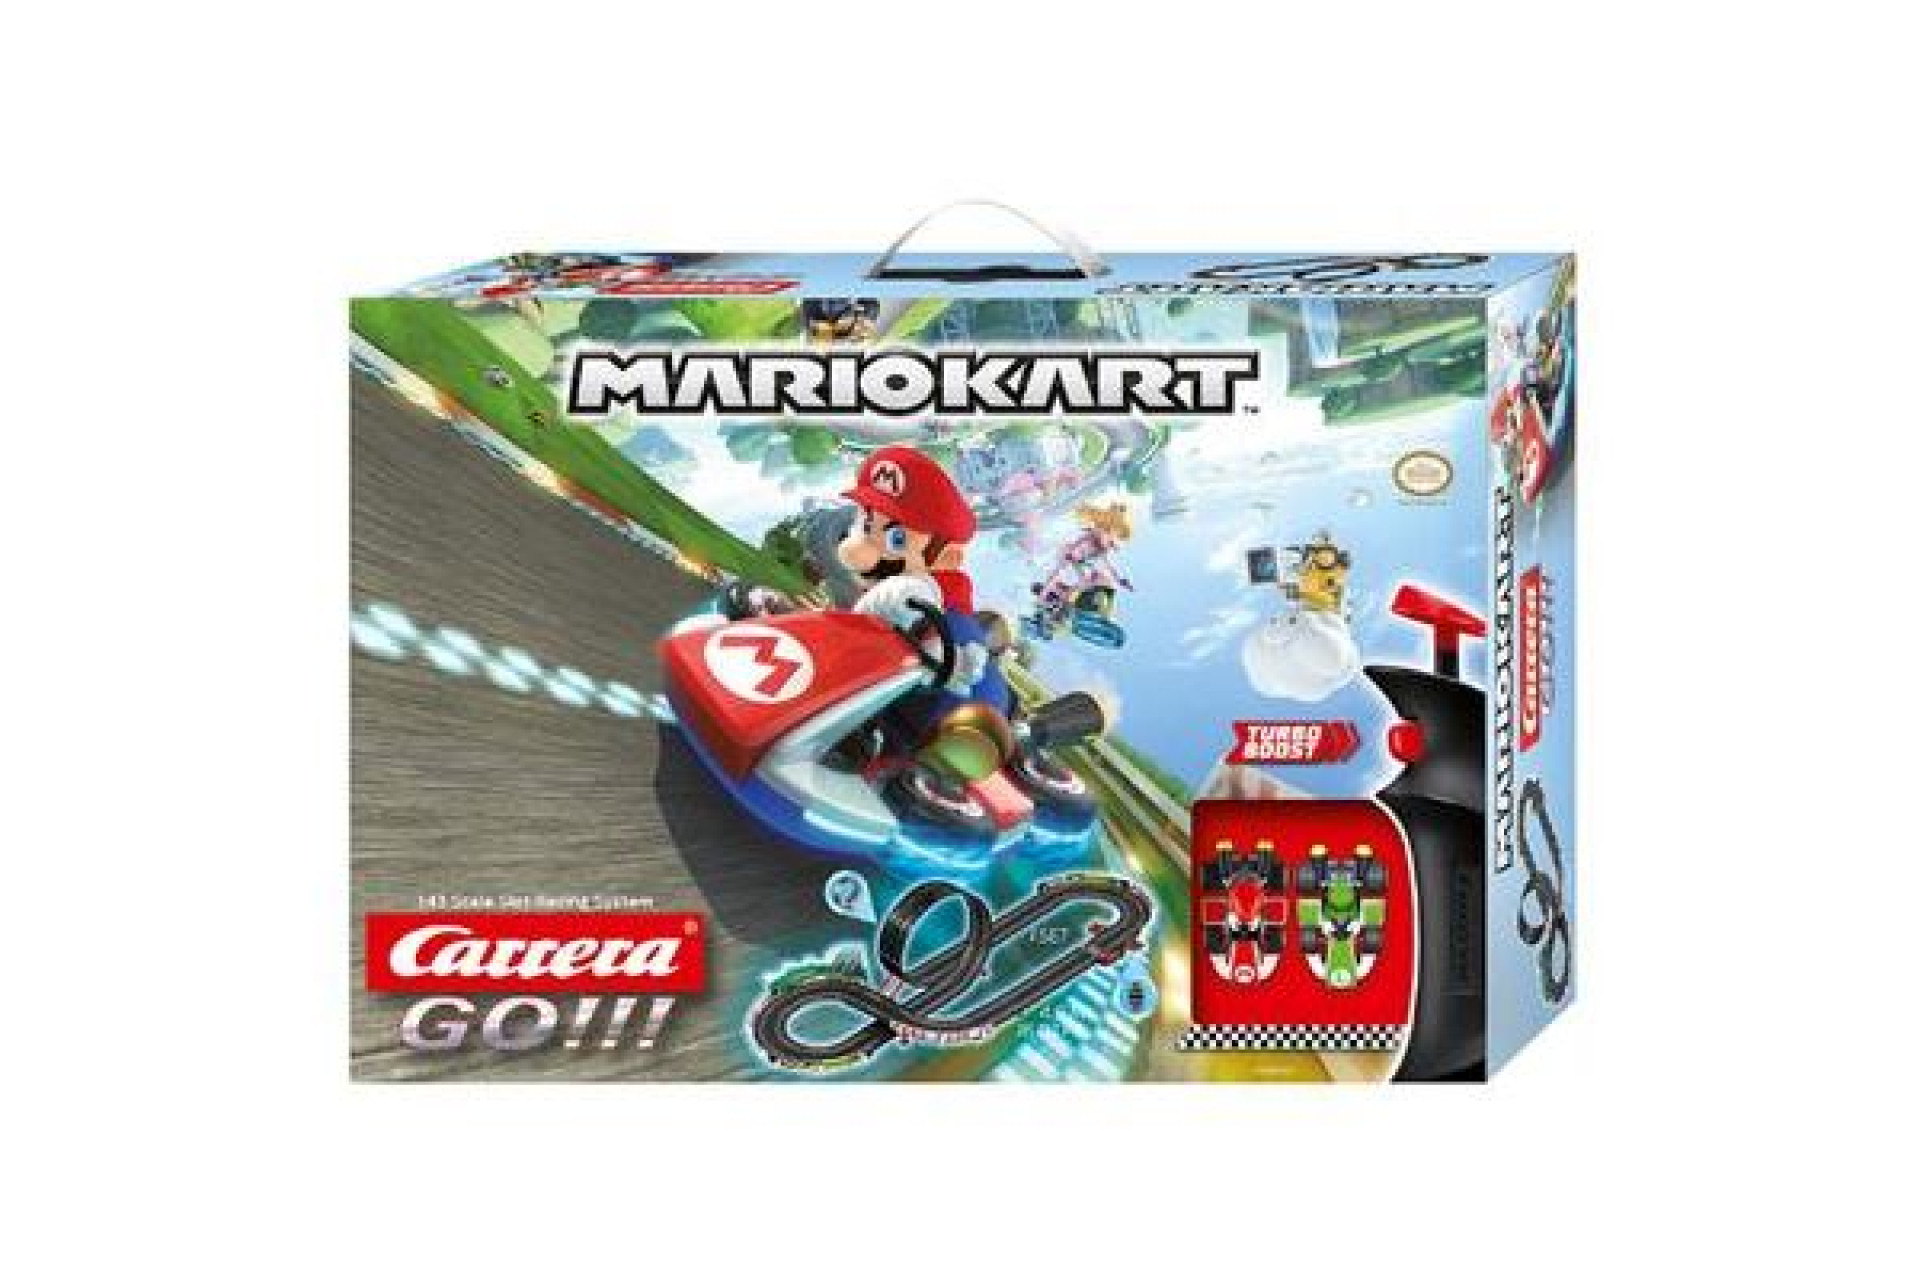 Acheter Kit de démarrage Mario Kart Nintendo Carrera Go!!!